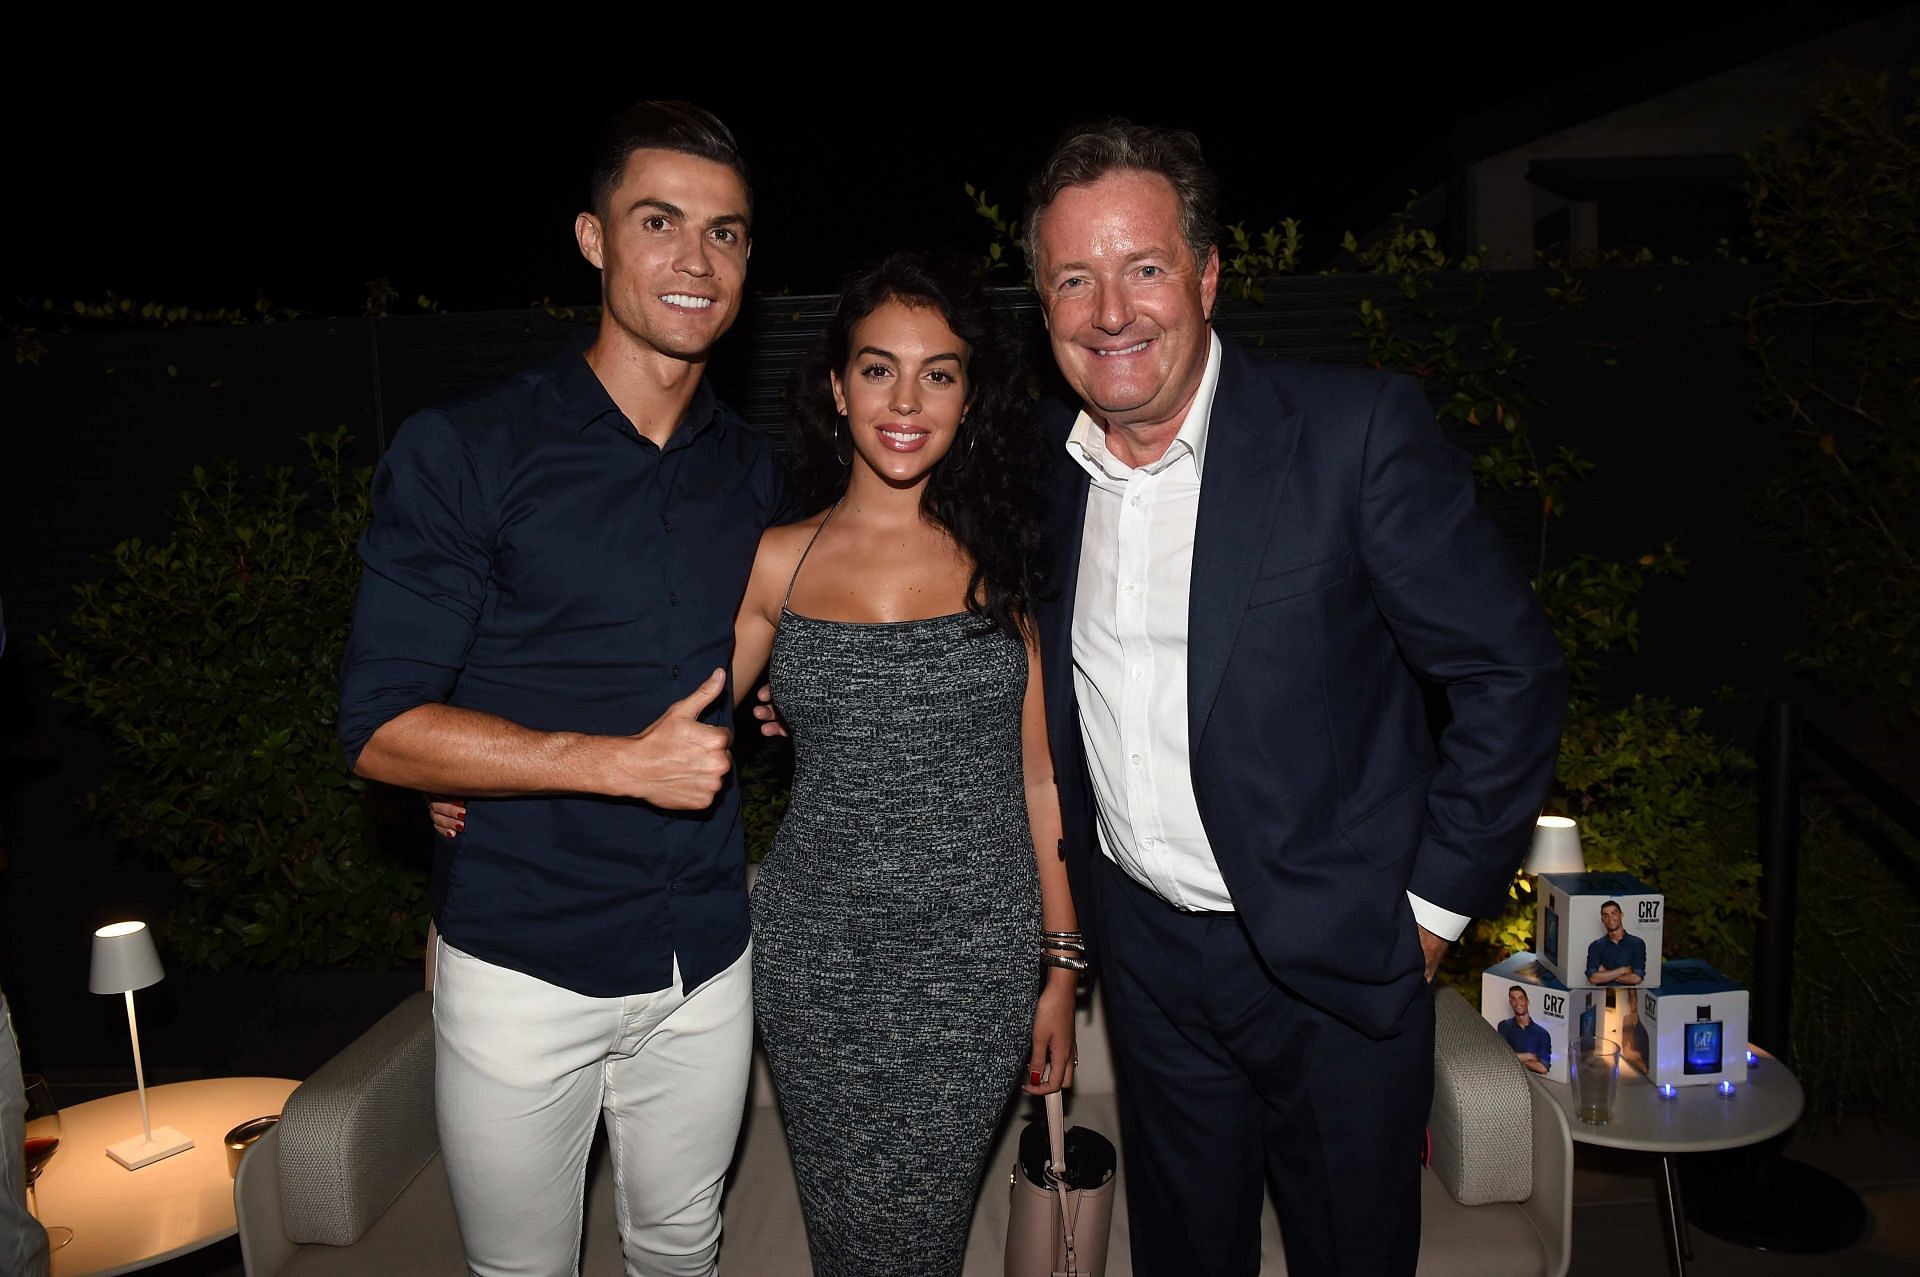 Cristiano Ronaldo with Georgina Rodriguez and Piers Morgan